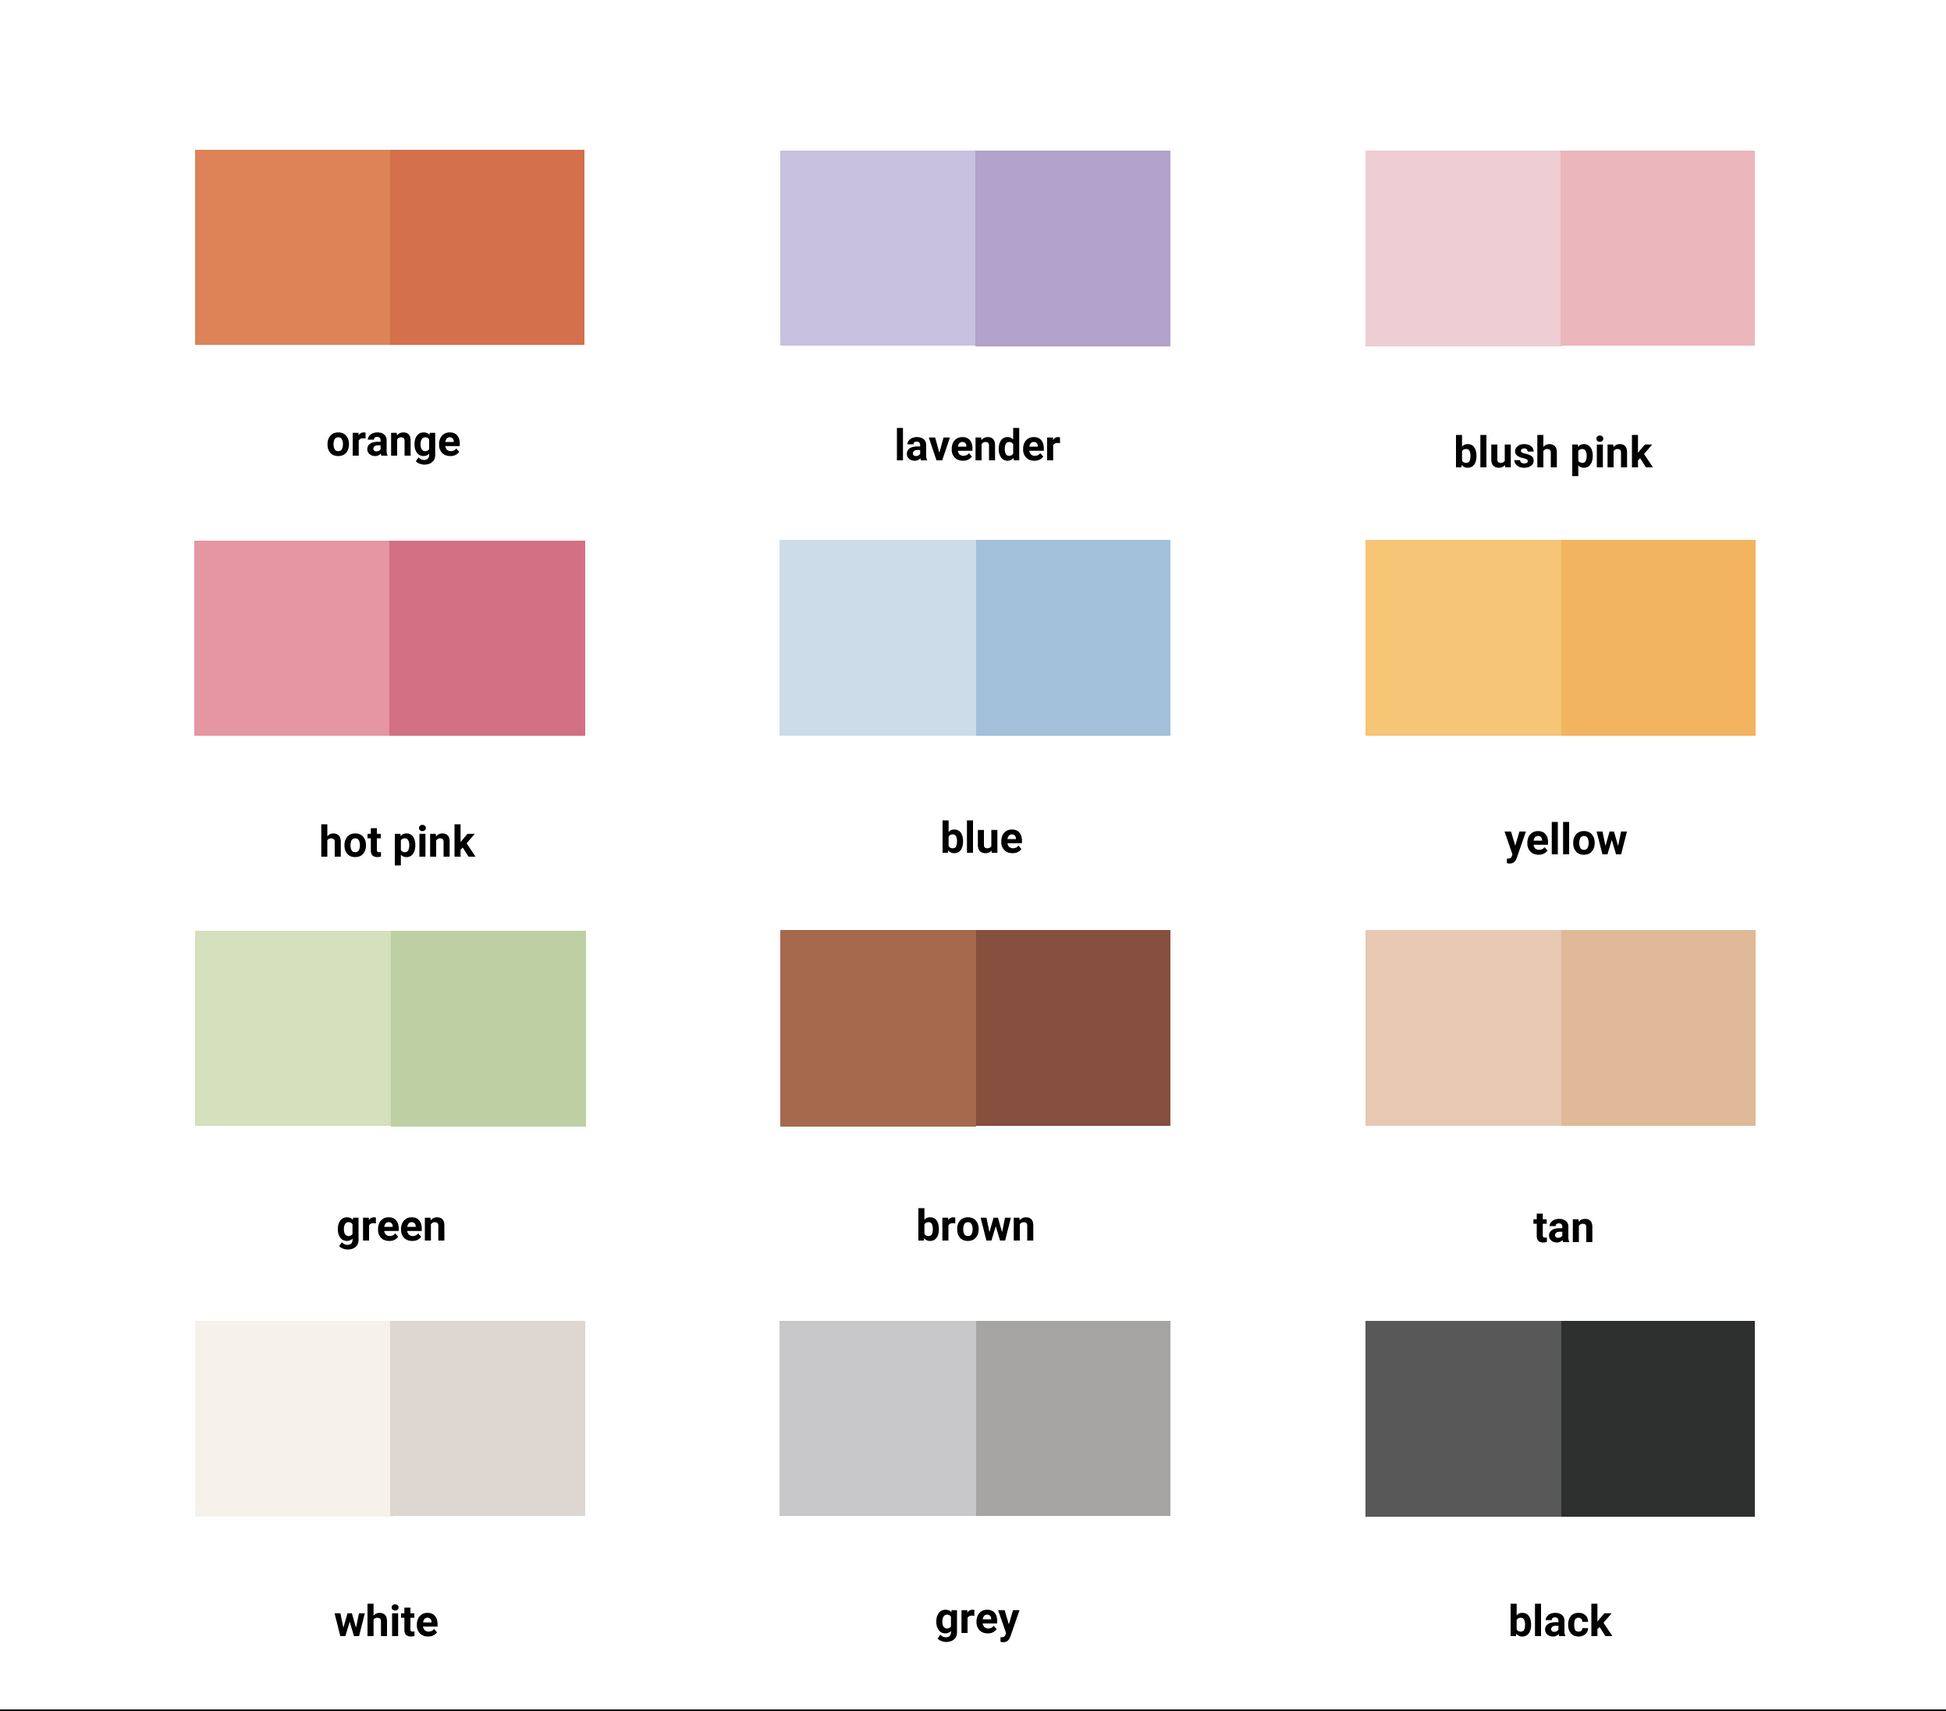 color chart: orange, lavender, blush pink, hot pink, blue, yellow, green, brown, tan, white, grey, and black.